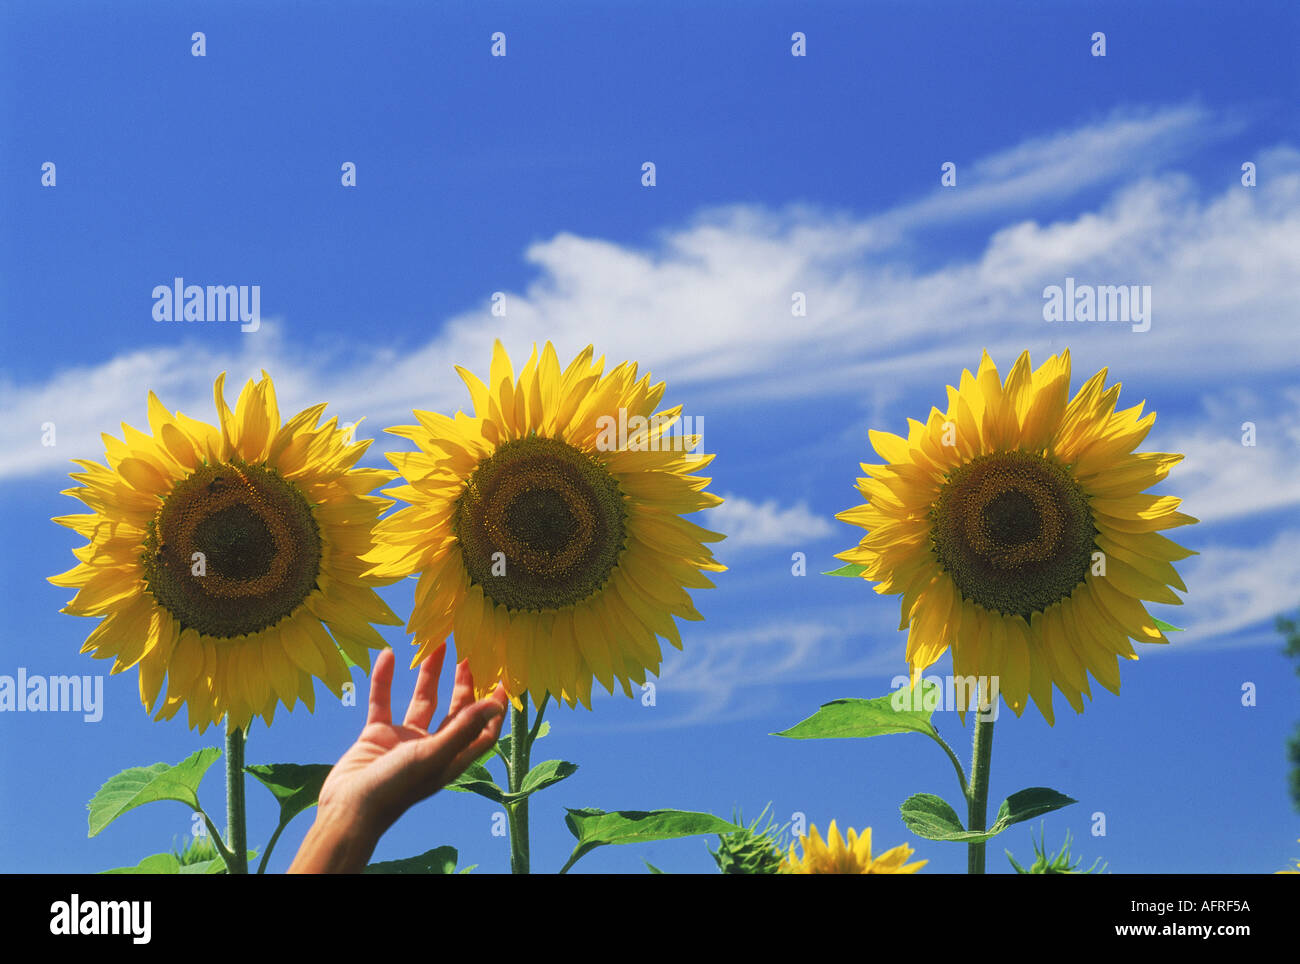 Childs hand reaching for sunflower Stock Photo